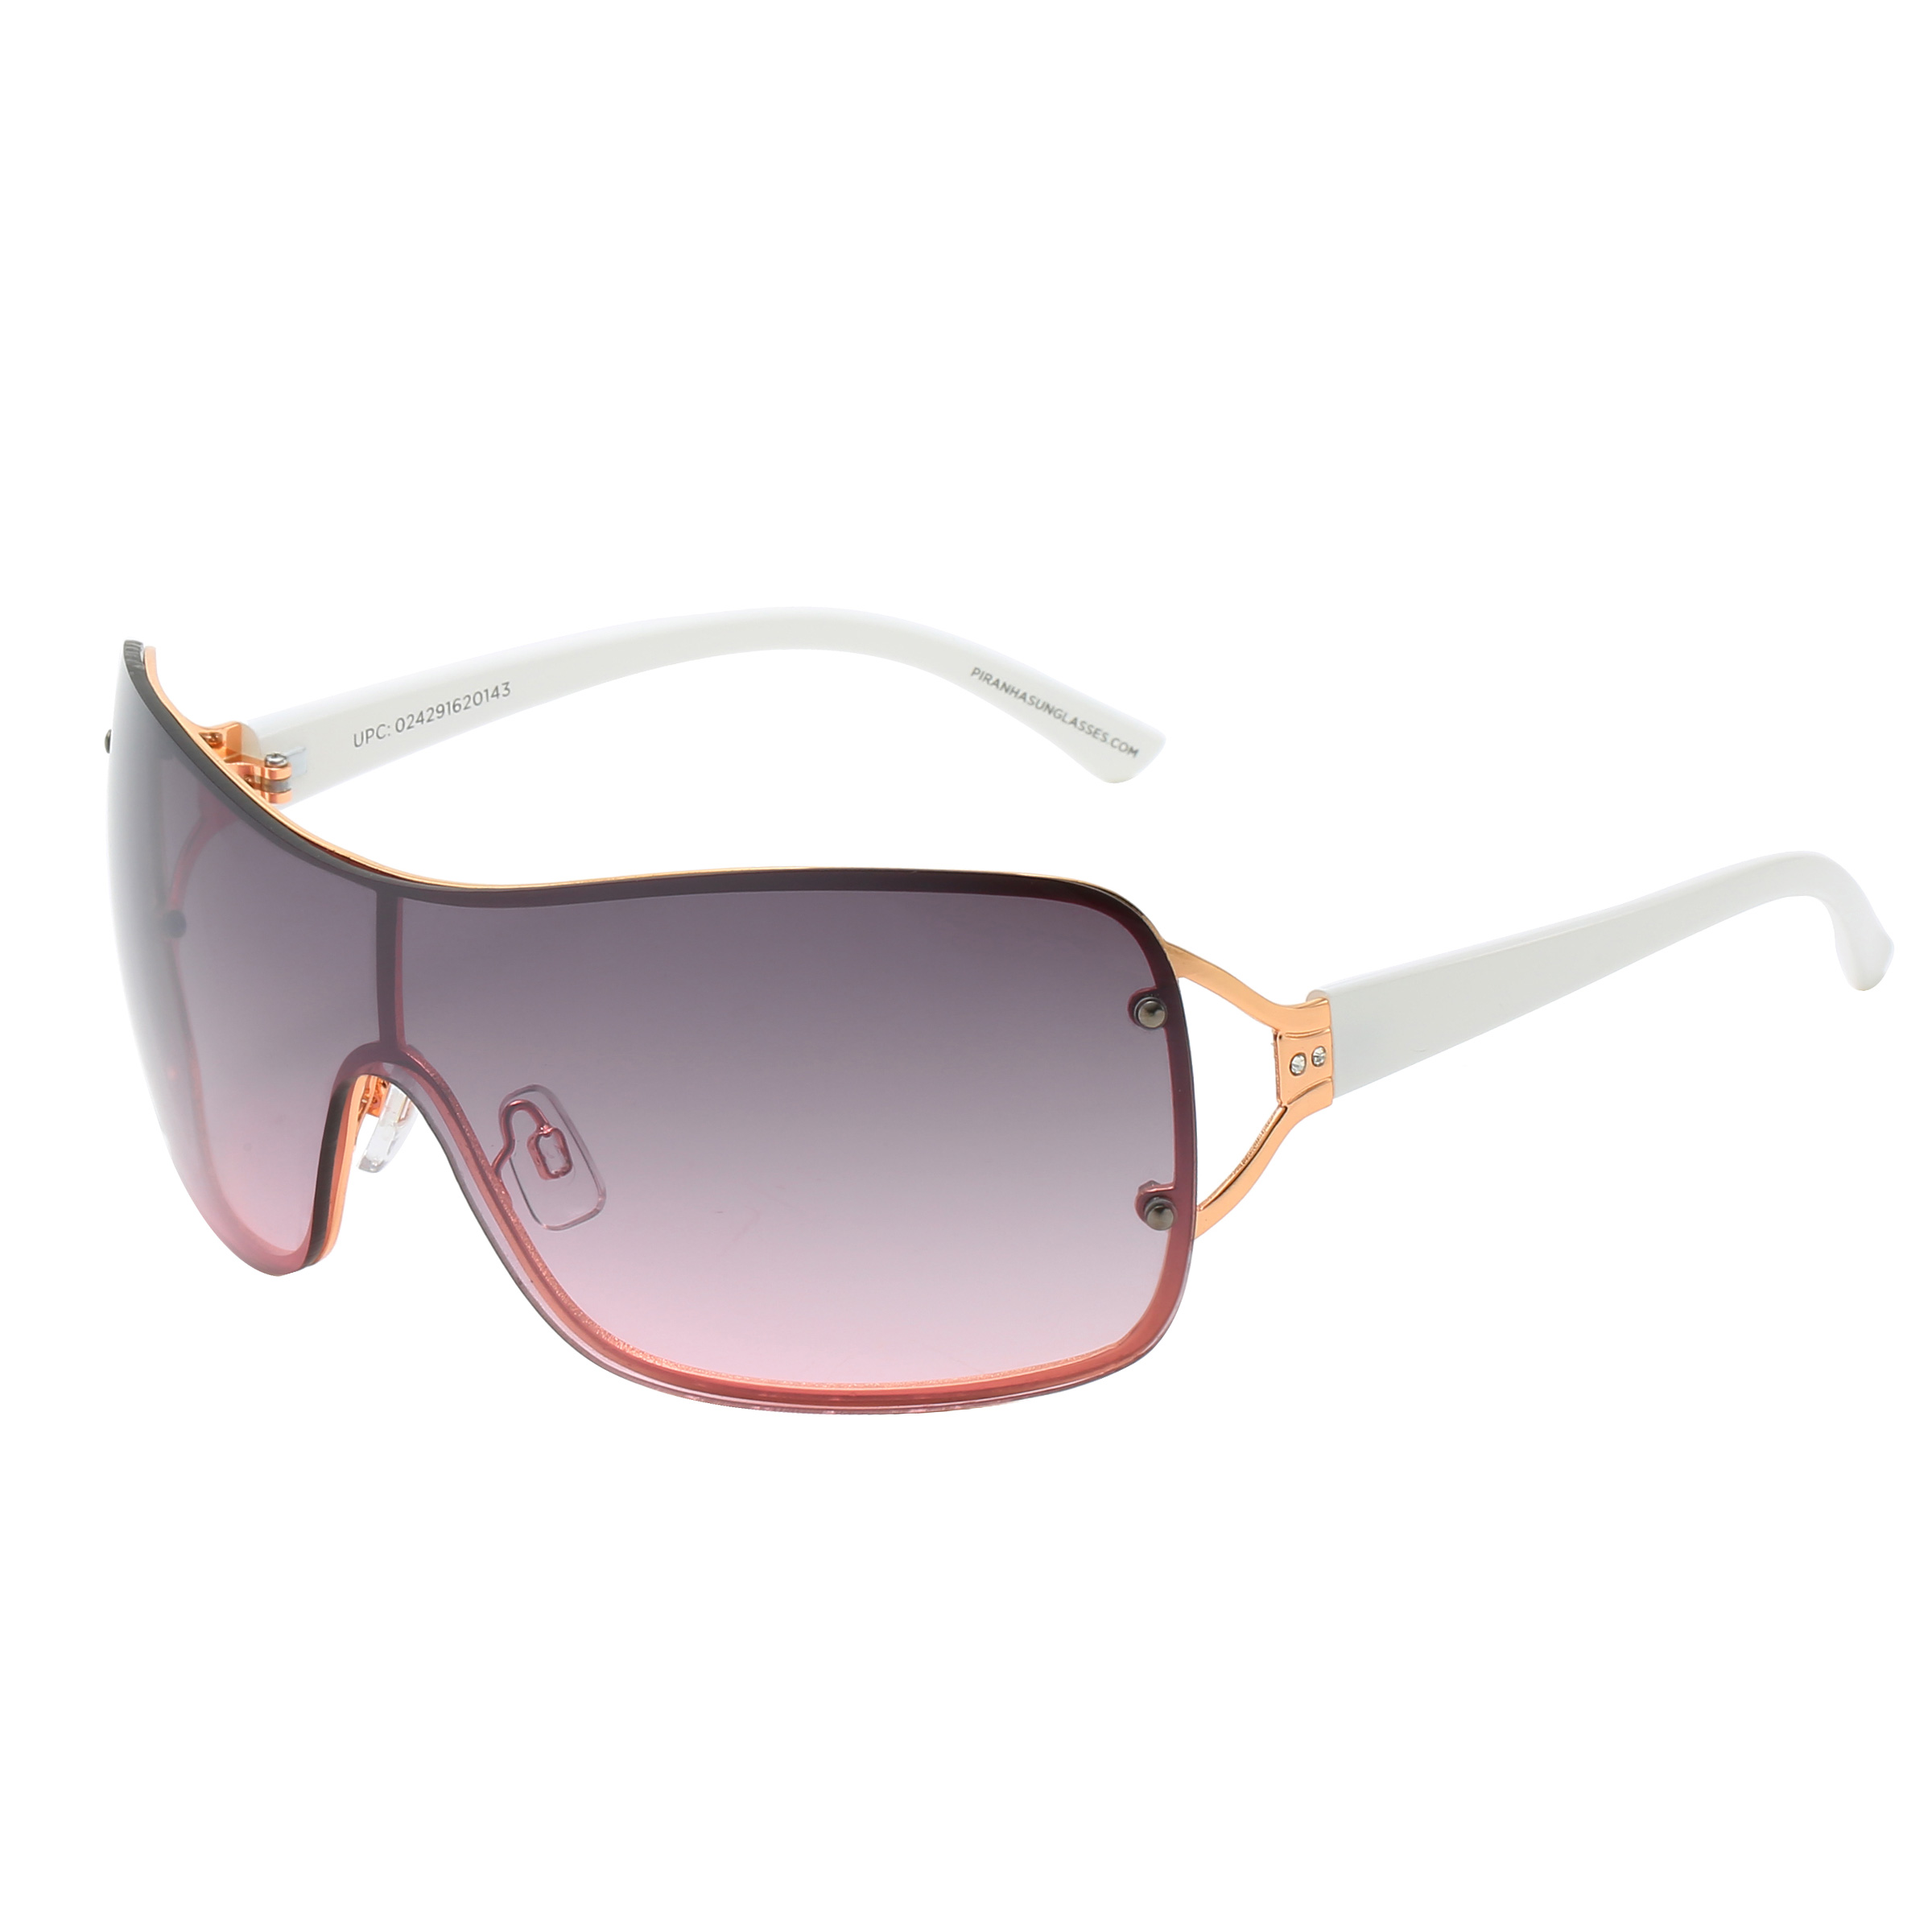 Piranha Eyewear Birkin Oversize Shield Sunglasses for Women with Purple Gradient Lens - image 1 of 3